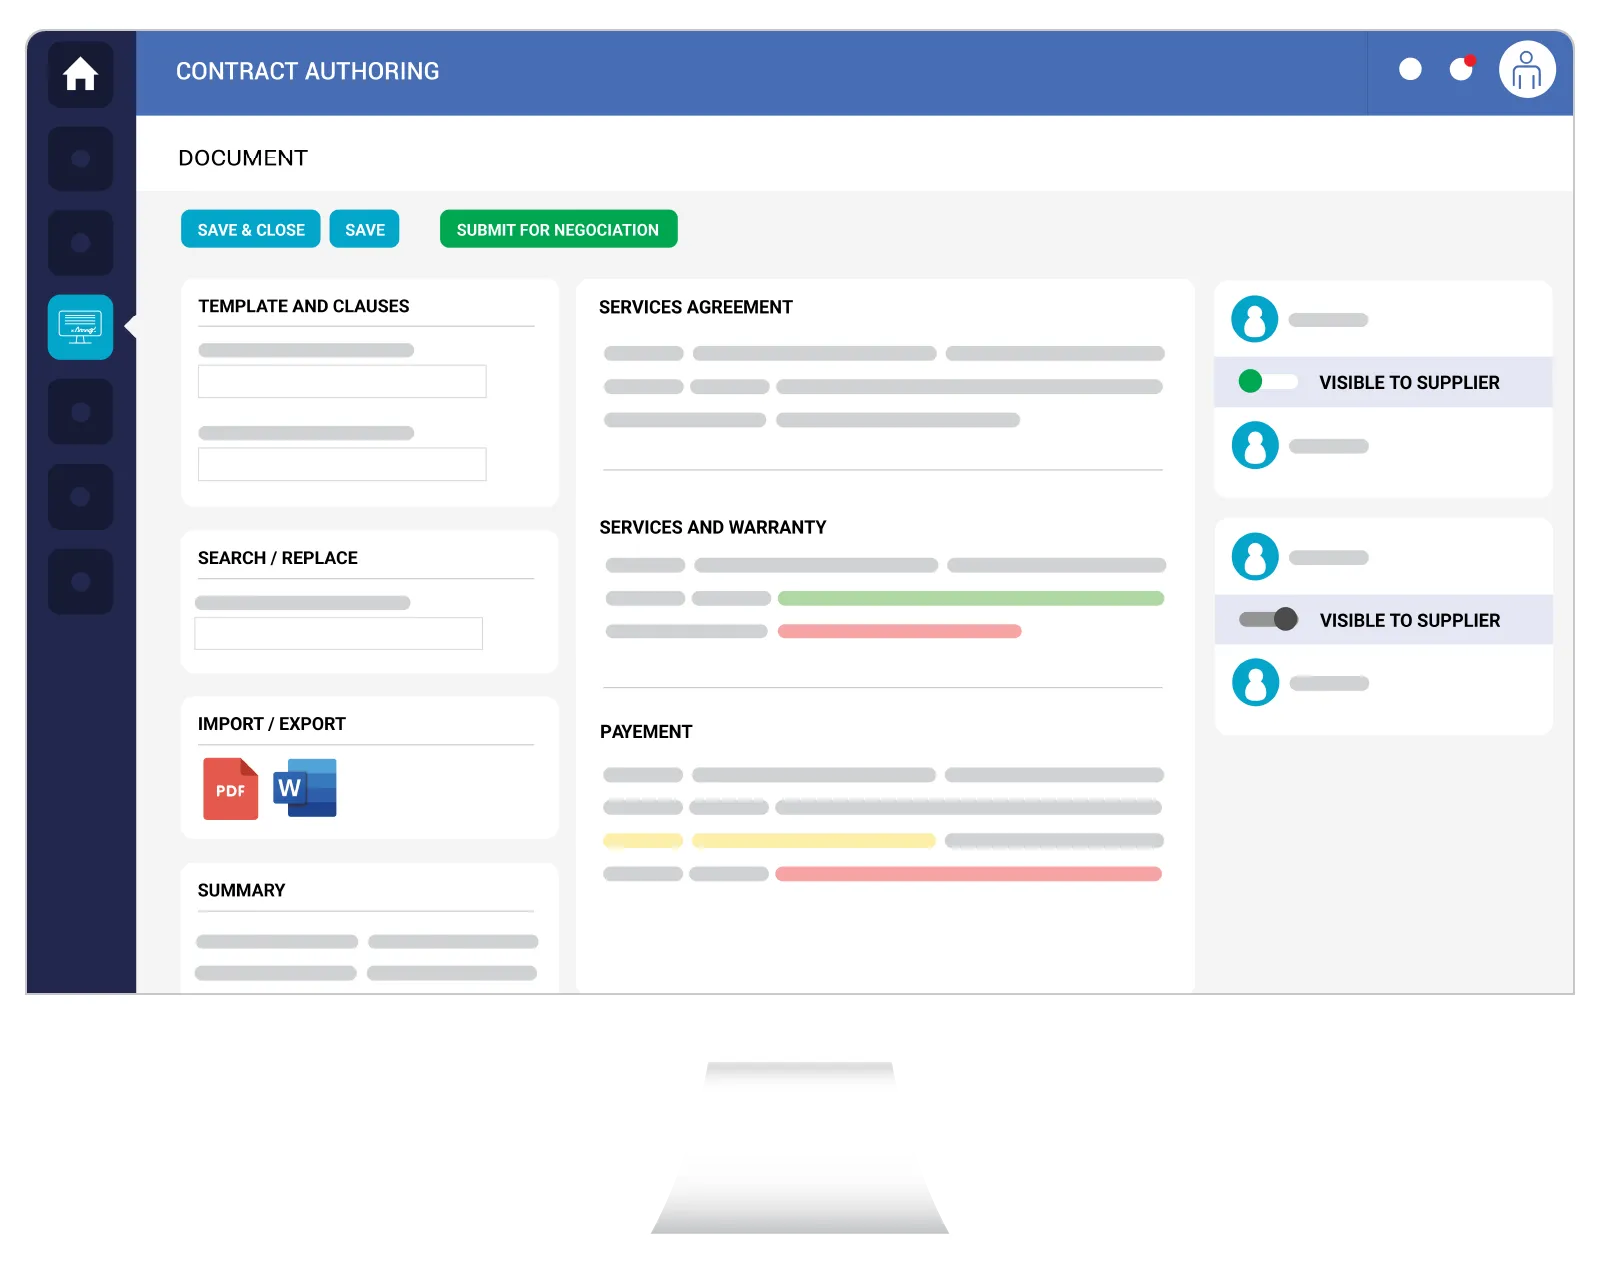 Screenshot – Ivalua Contract Management - Contract Authoring